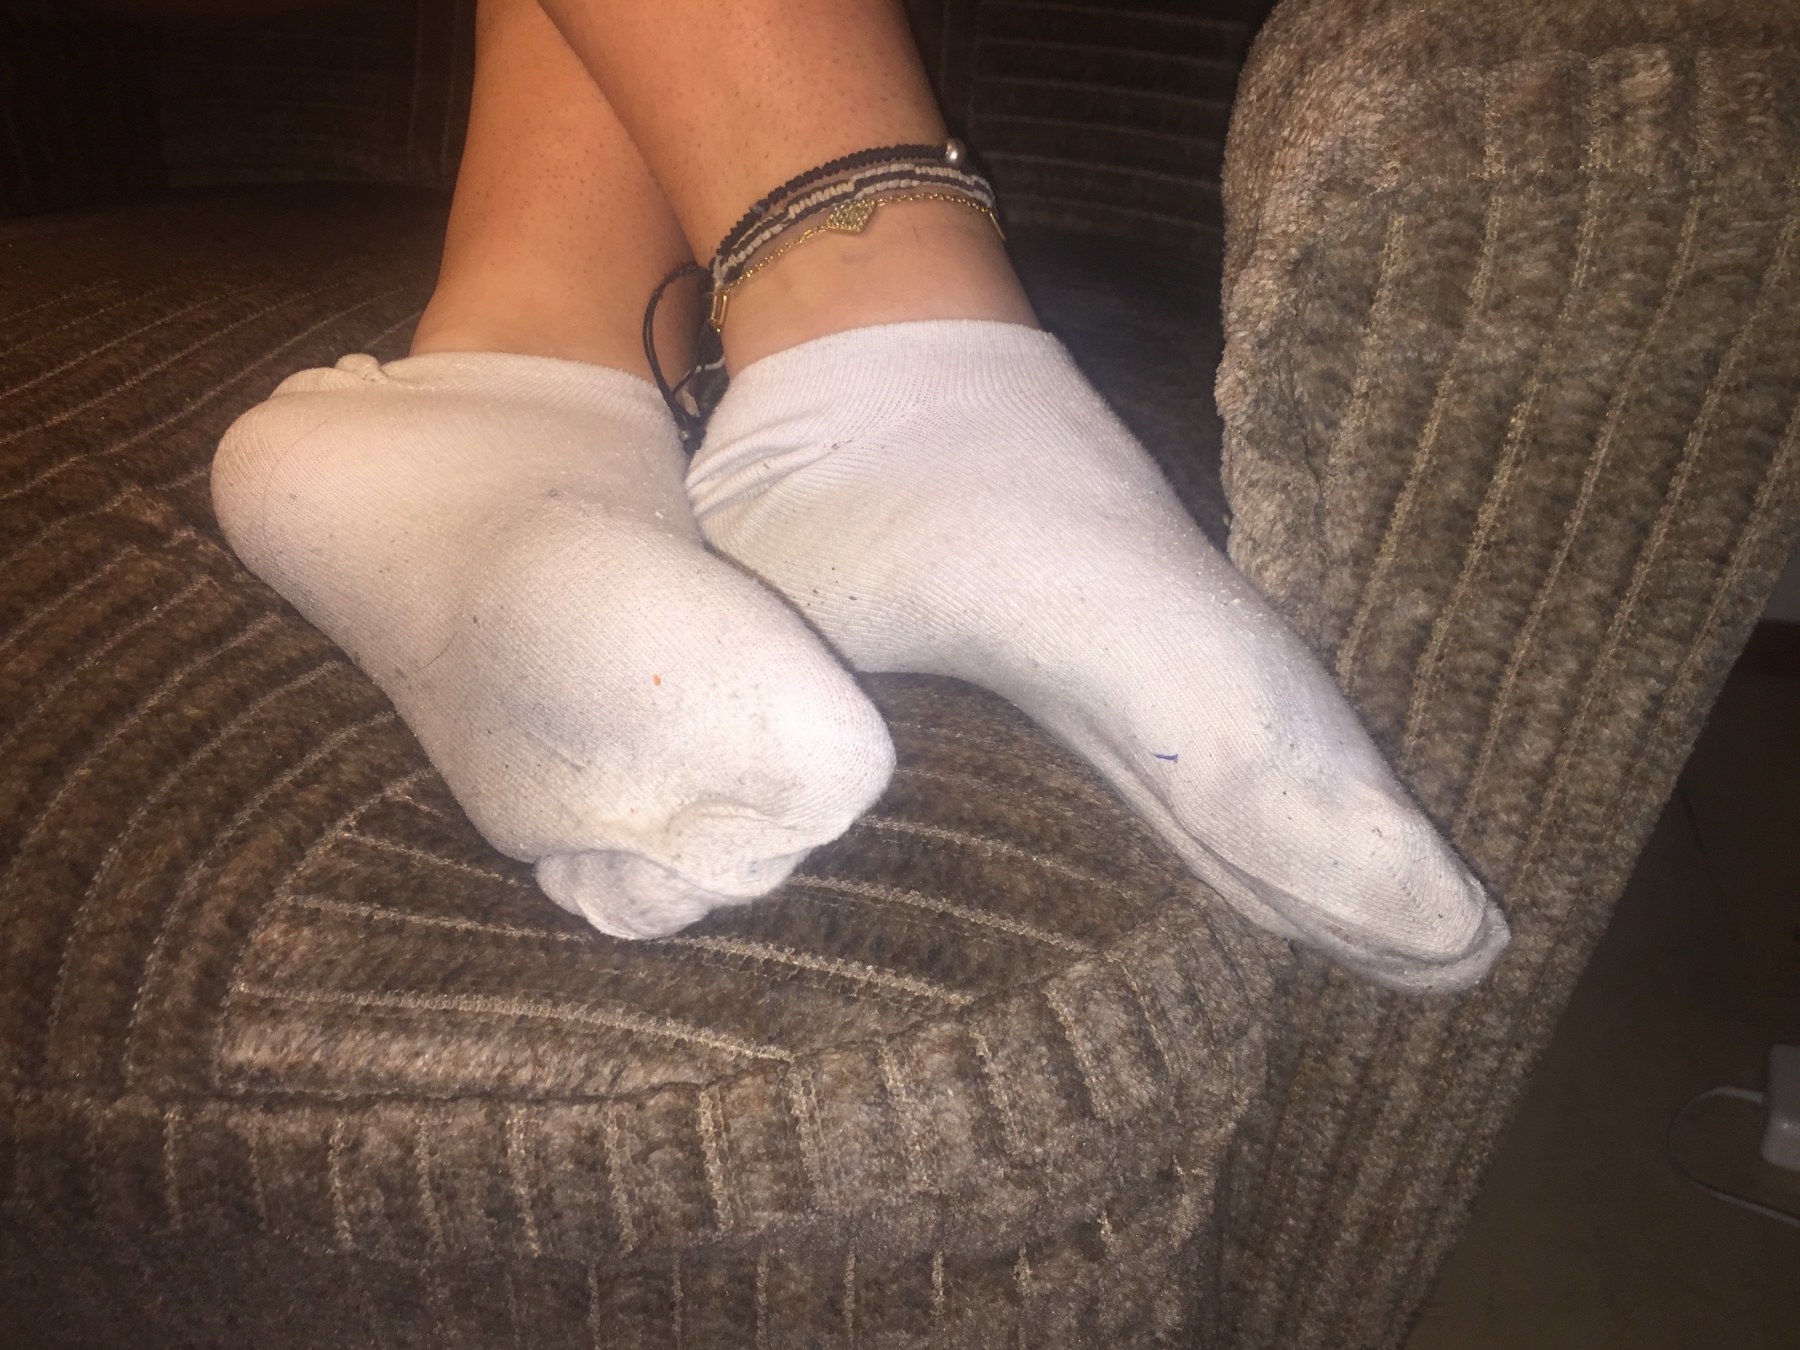 Sweaty dirty white socks